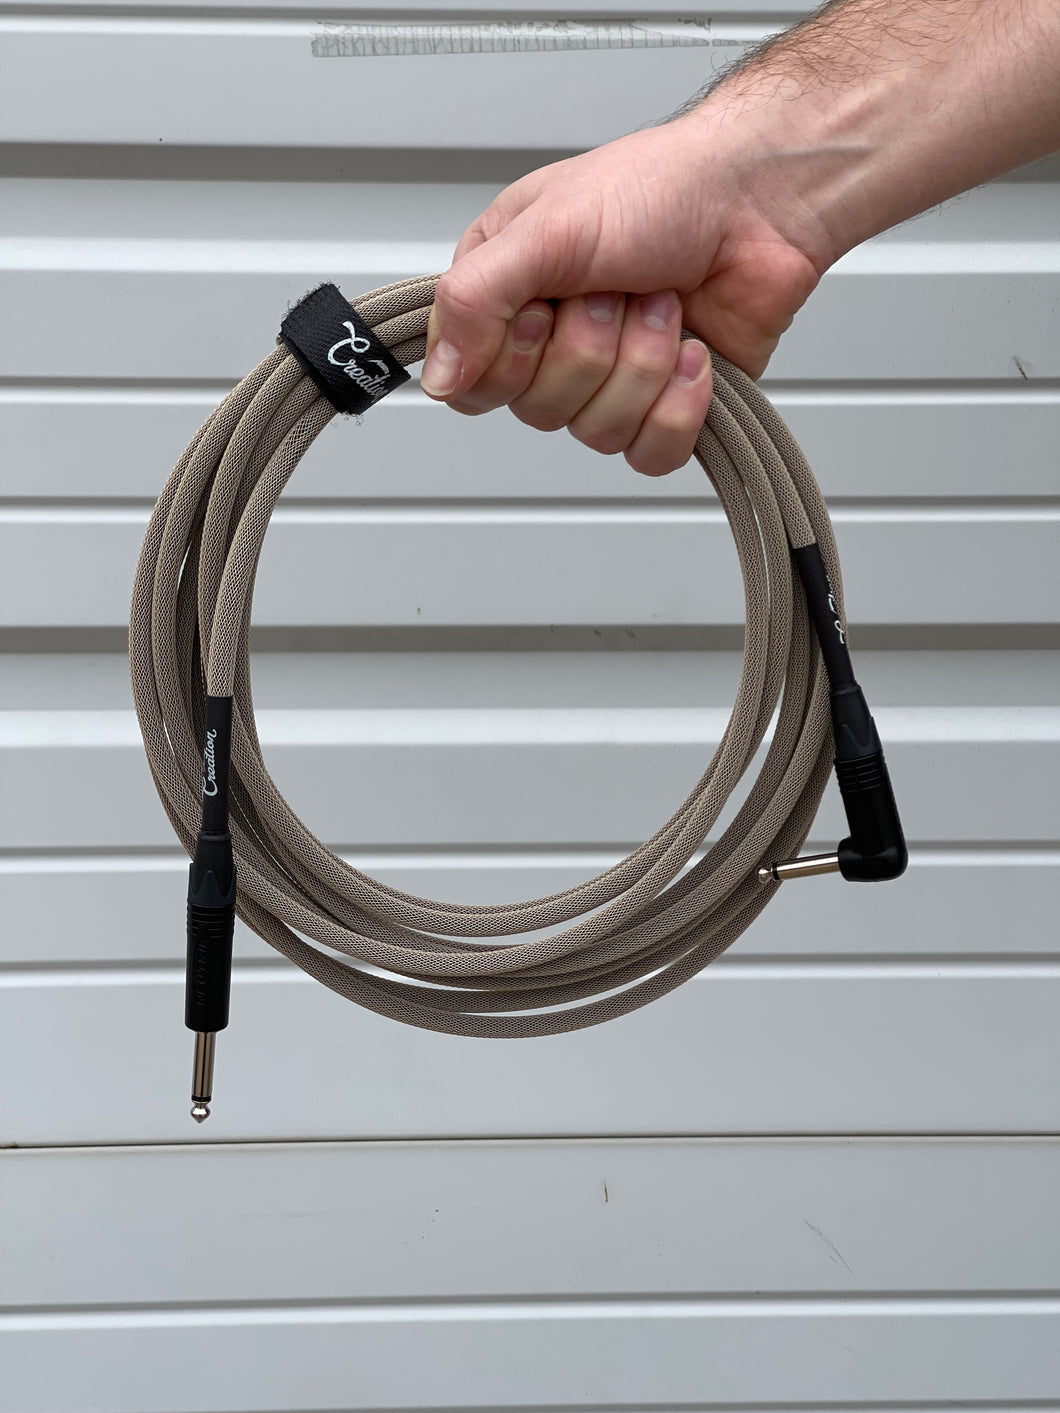 Custom Shop Instrument Cable - Khaki